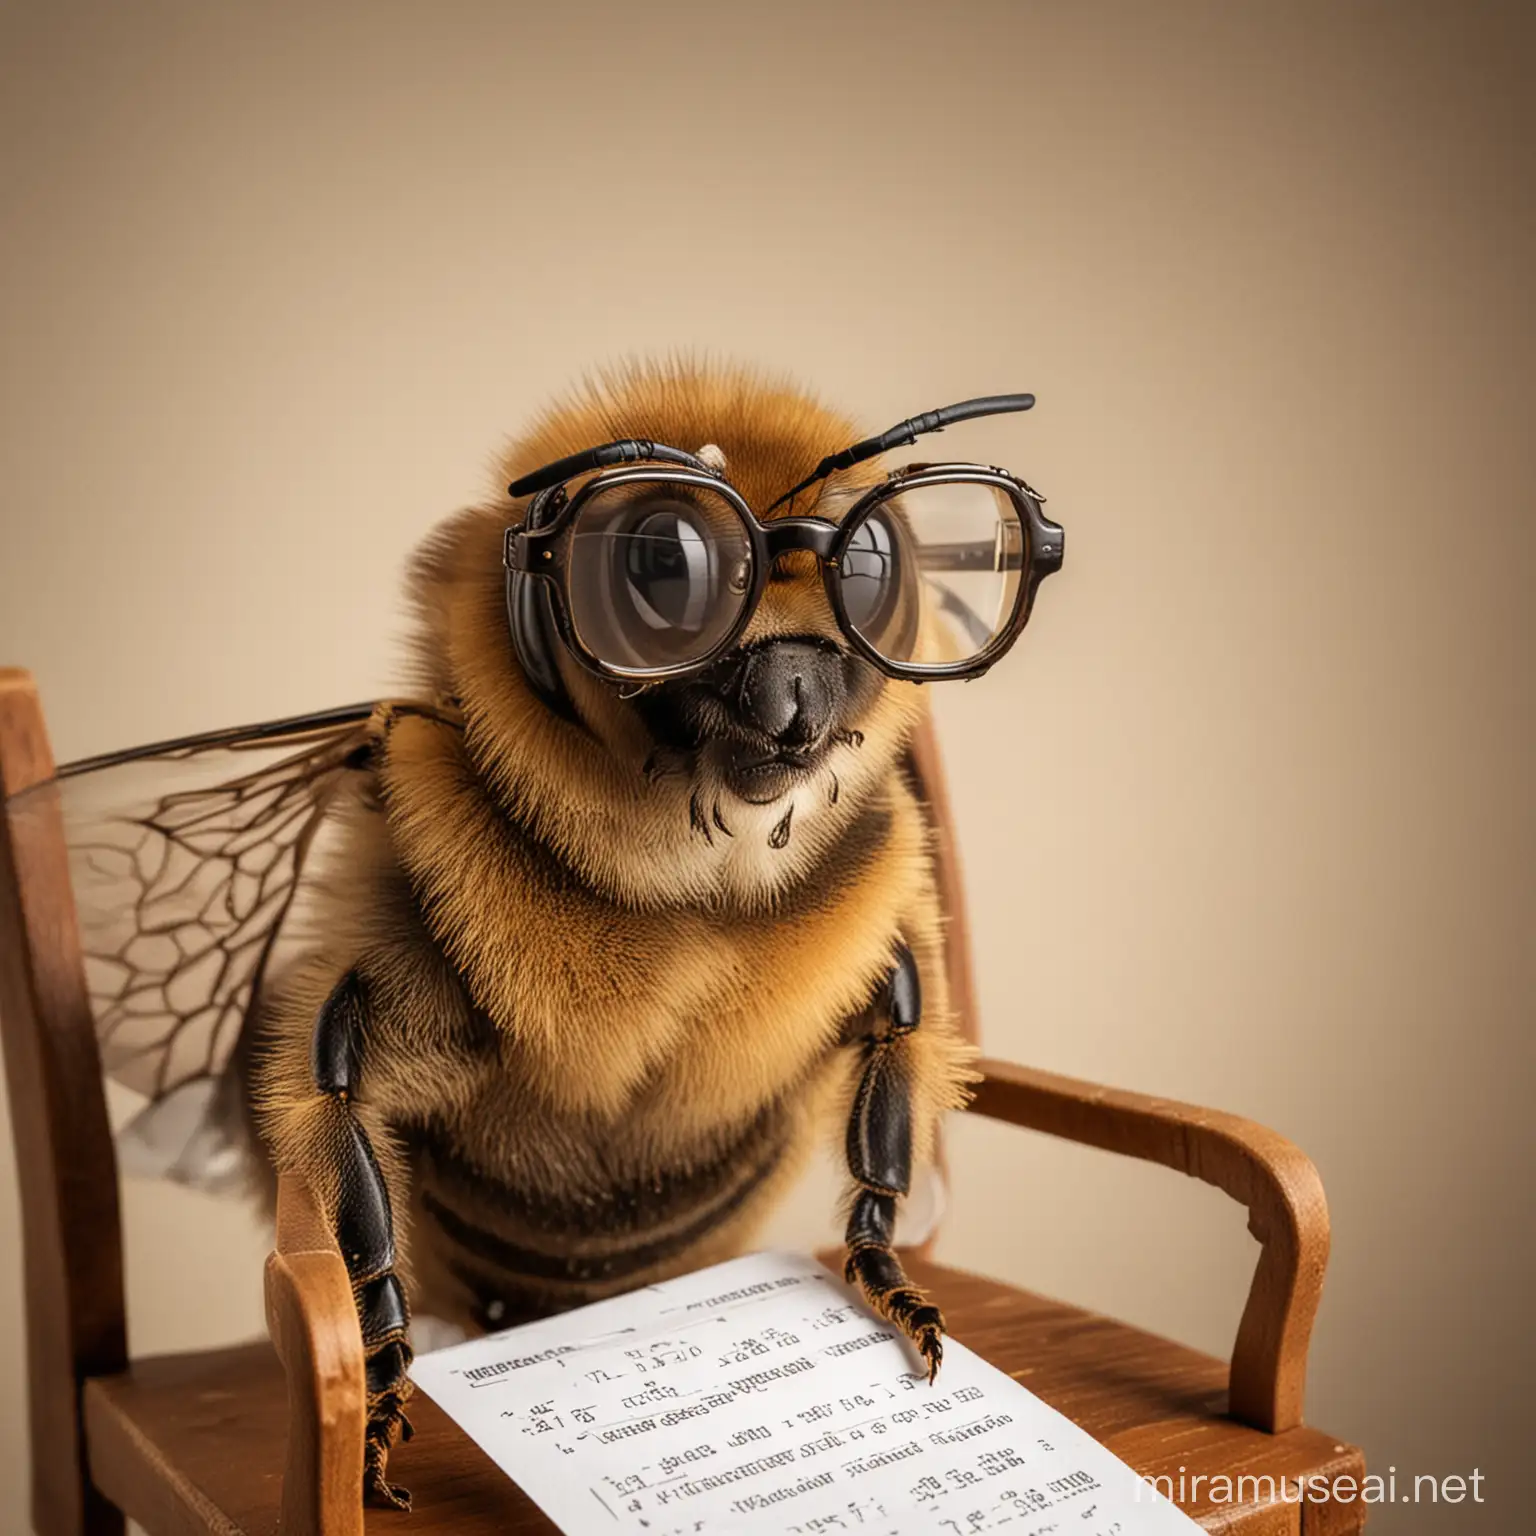 Honeybee Wearing Glasses Analyzing Statistical Data